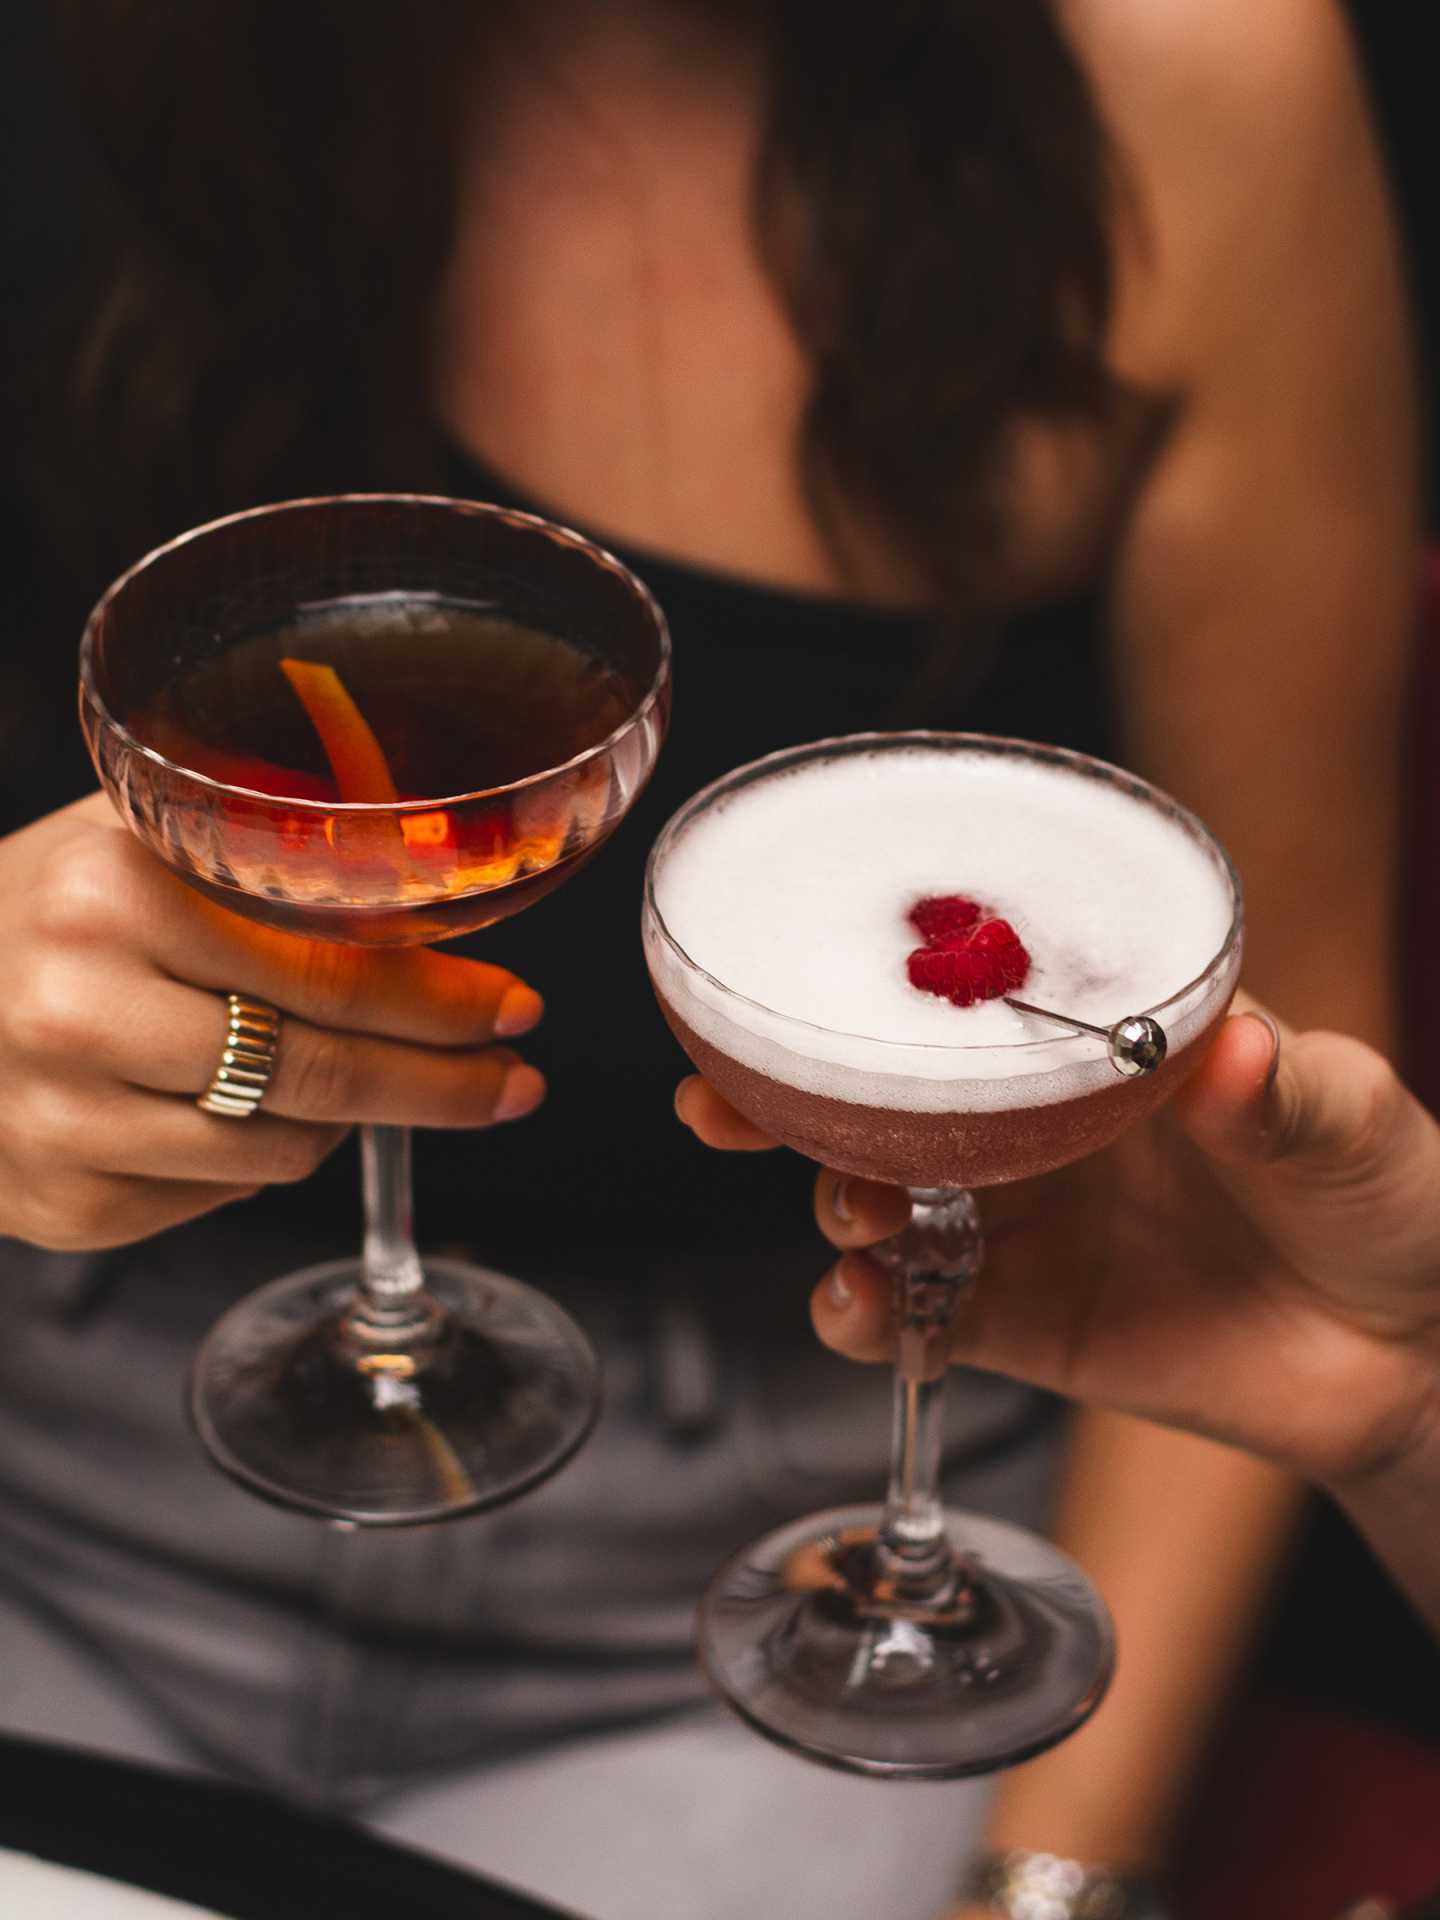 Best new Toronto restaurants | Two elegant cocktails at Cafe Renee in Toronto